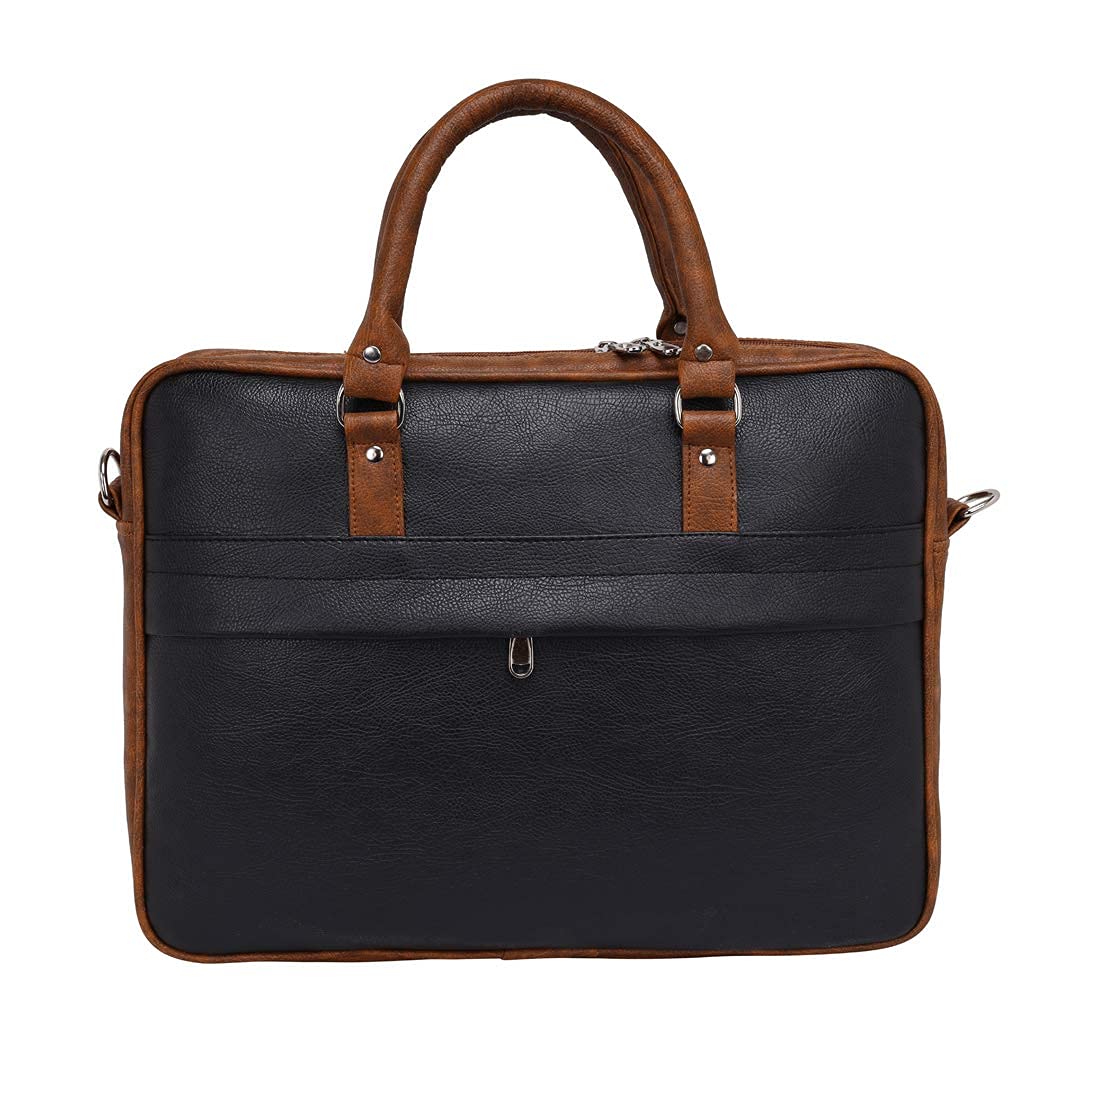 Leather World Multi Color Pu Leatherette Laptop Office Messenger Tablet Travel Shoulder Bag Men Women (Coffe Brown)